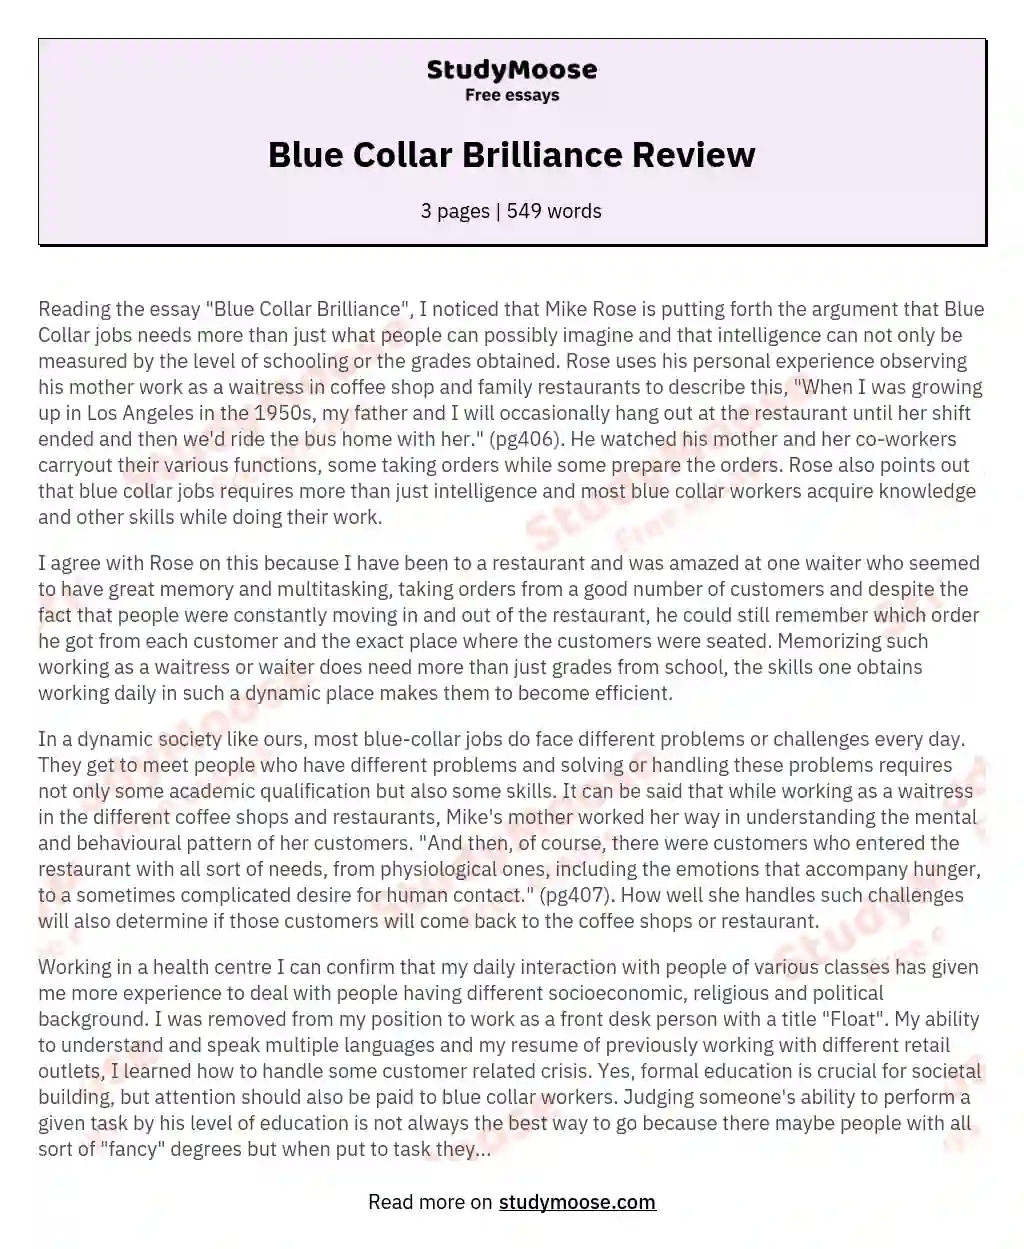 Blue Collar Brilliance Review essay